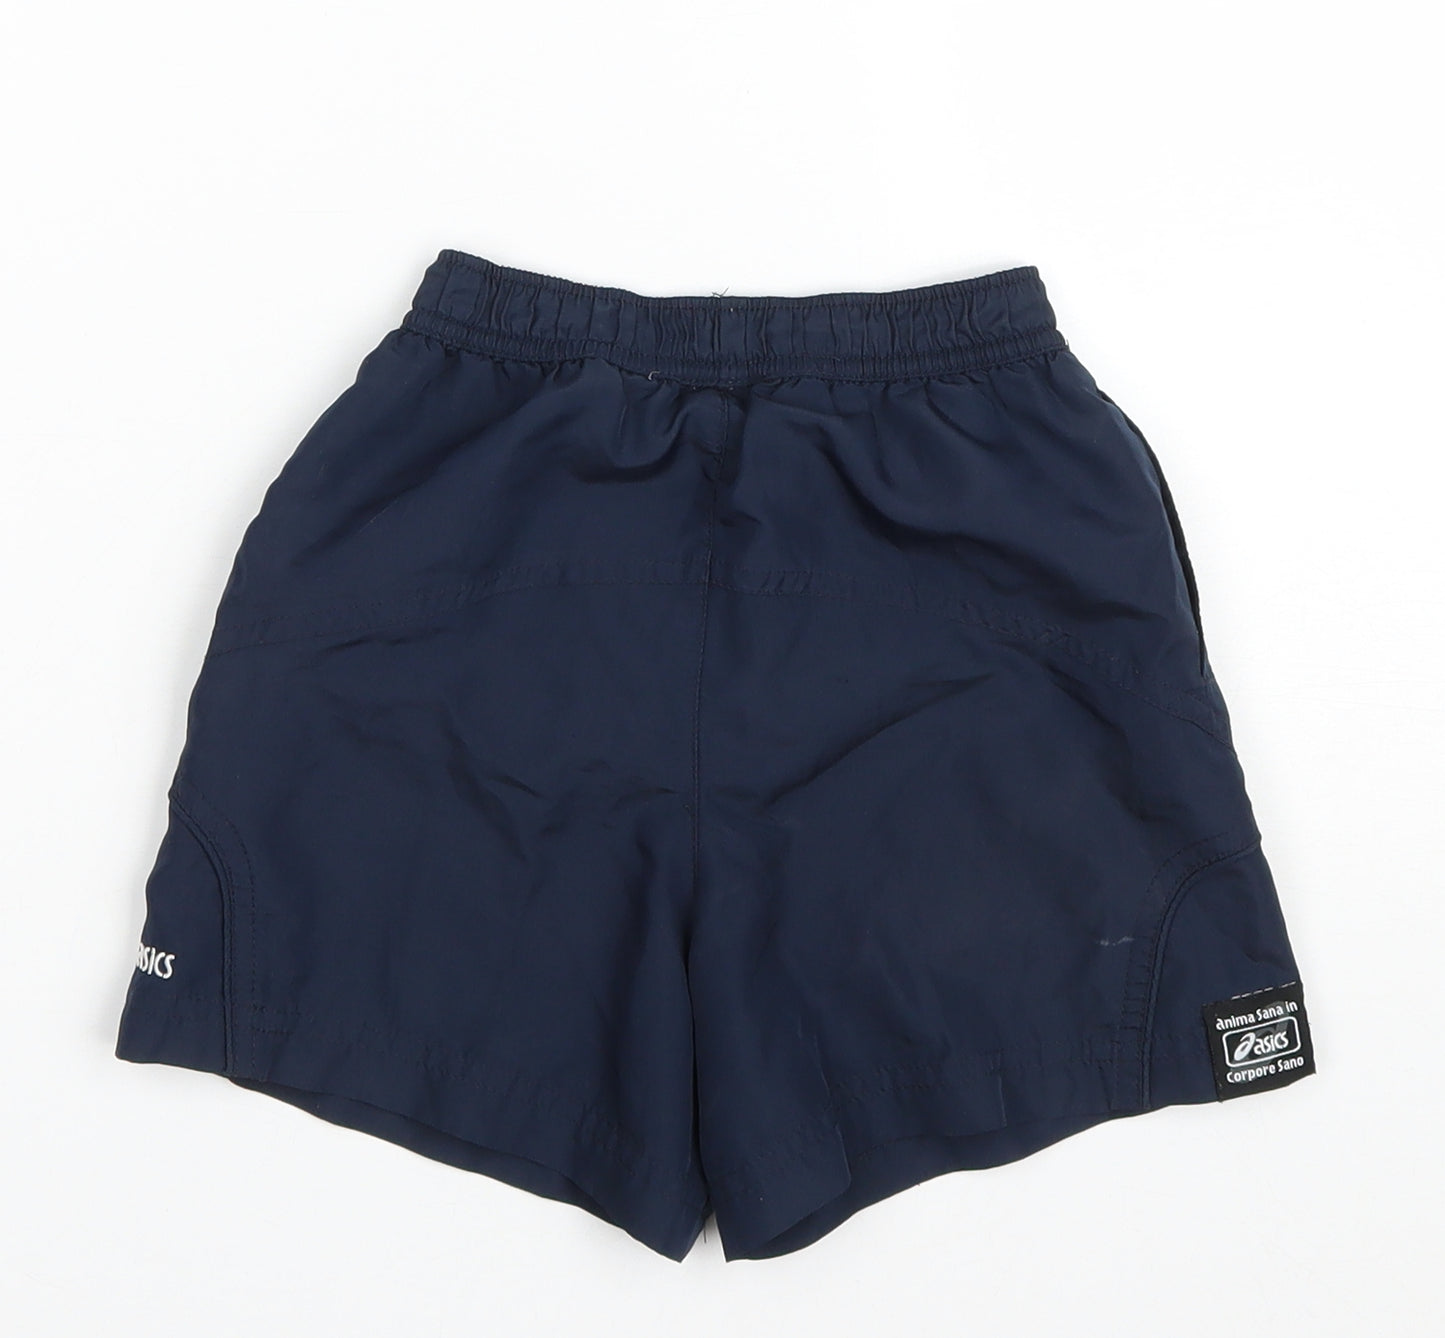 ASICS Boys Blue Polyester Sweat Shorts Size 2-3 Years Regular Drawstring - Swim Shorts